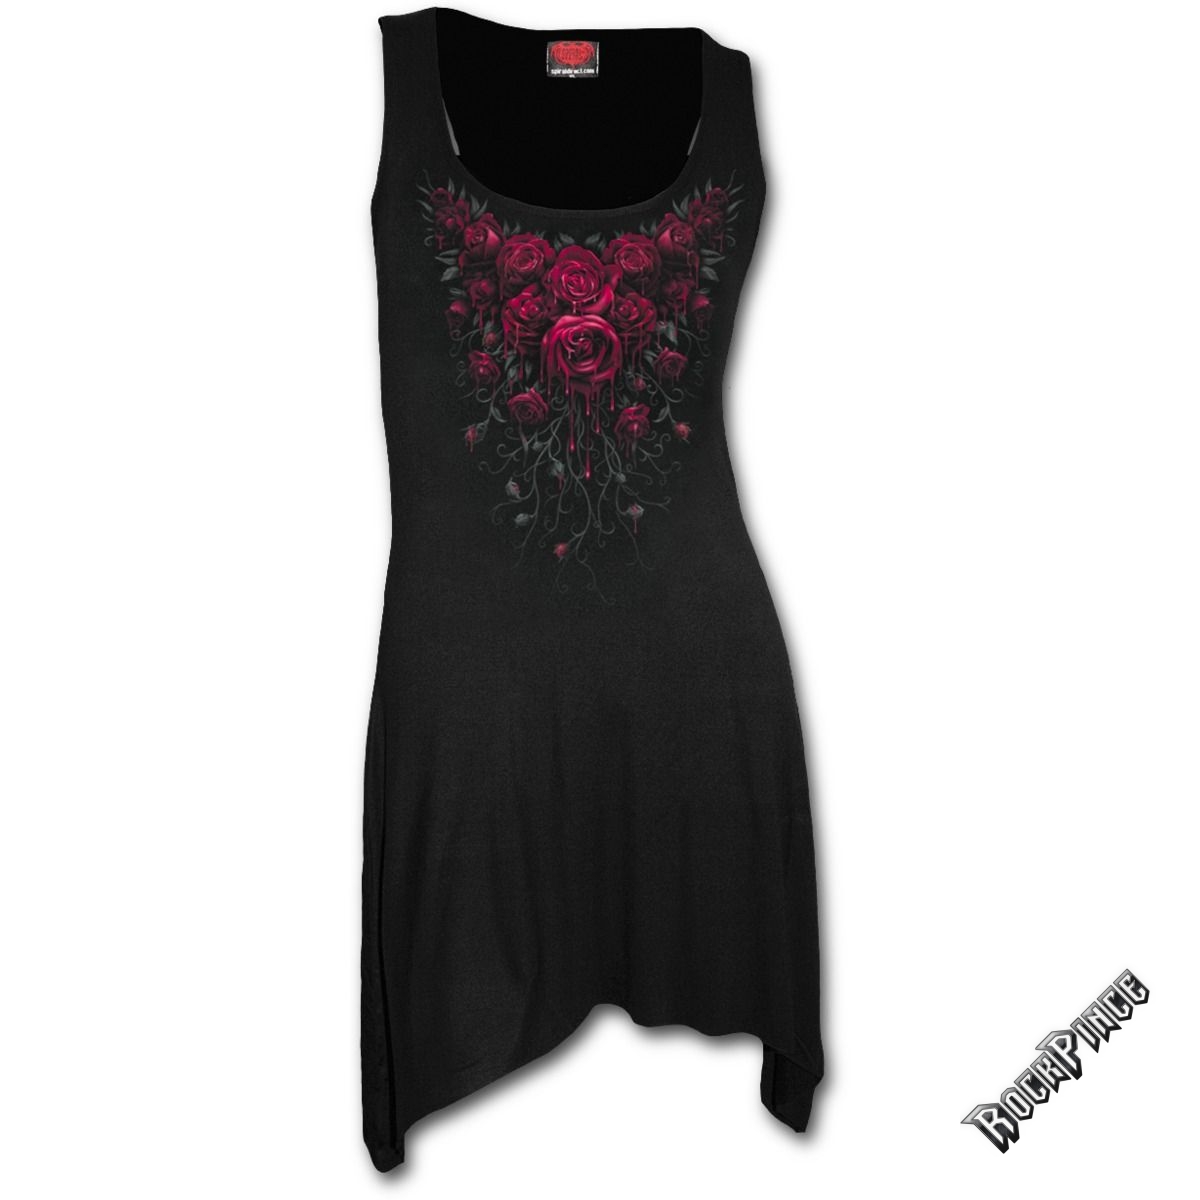 BLOOD ROSE - Goth Bottom Camisole Dress Black (Plain) - K018F105